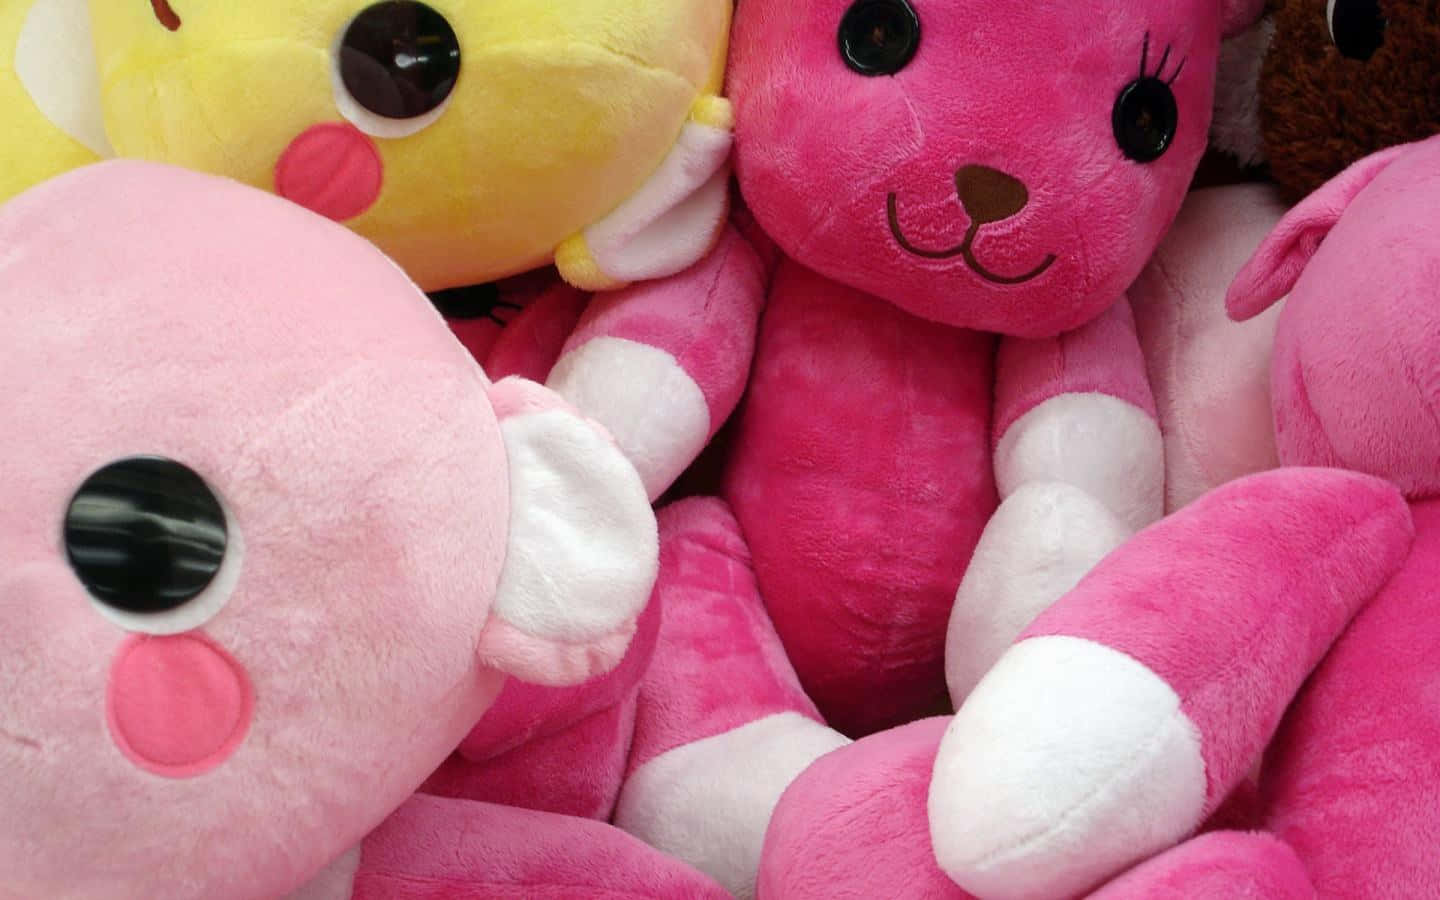 Cute Pink Teddy Bear Valentine's Day Wallpaper